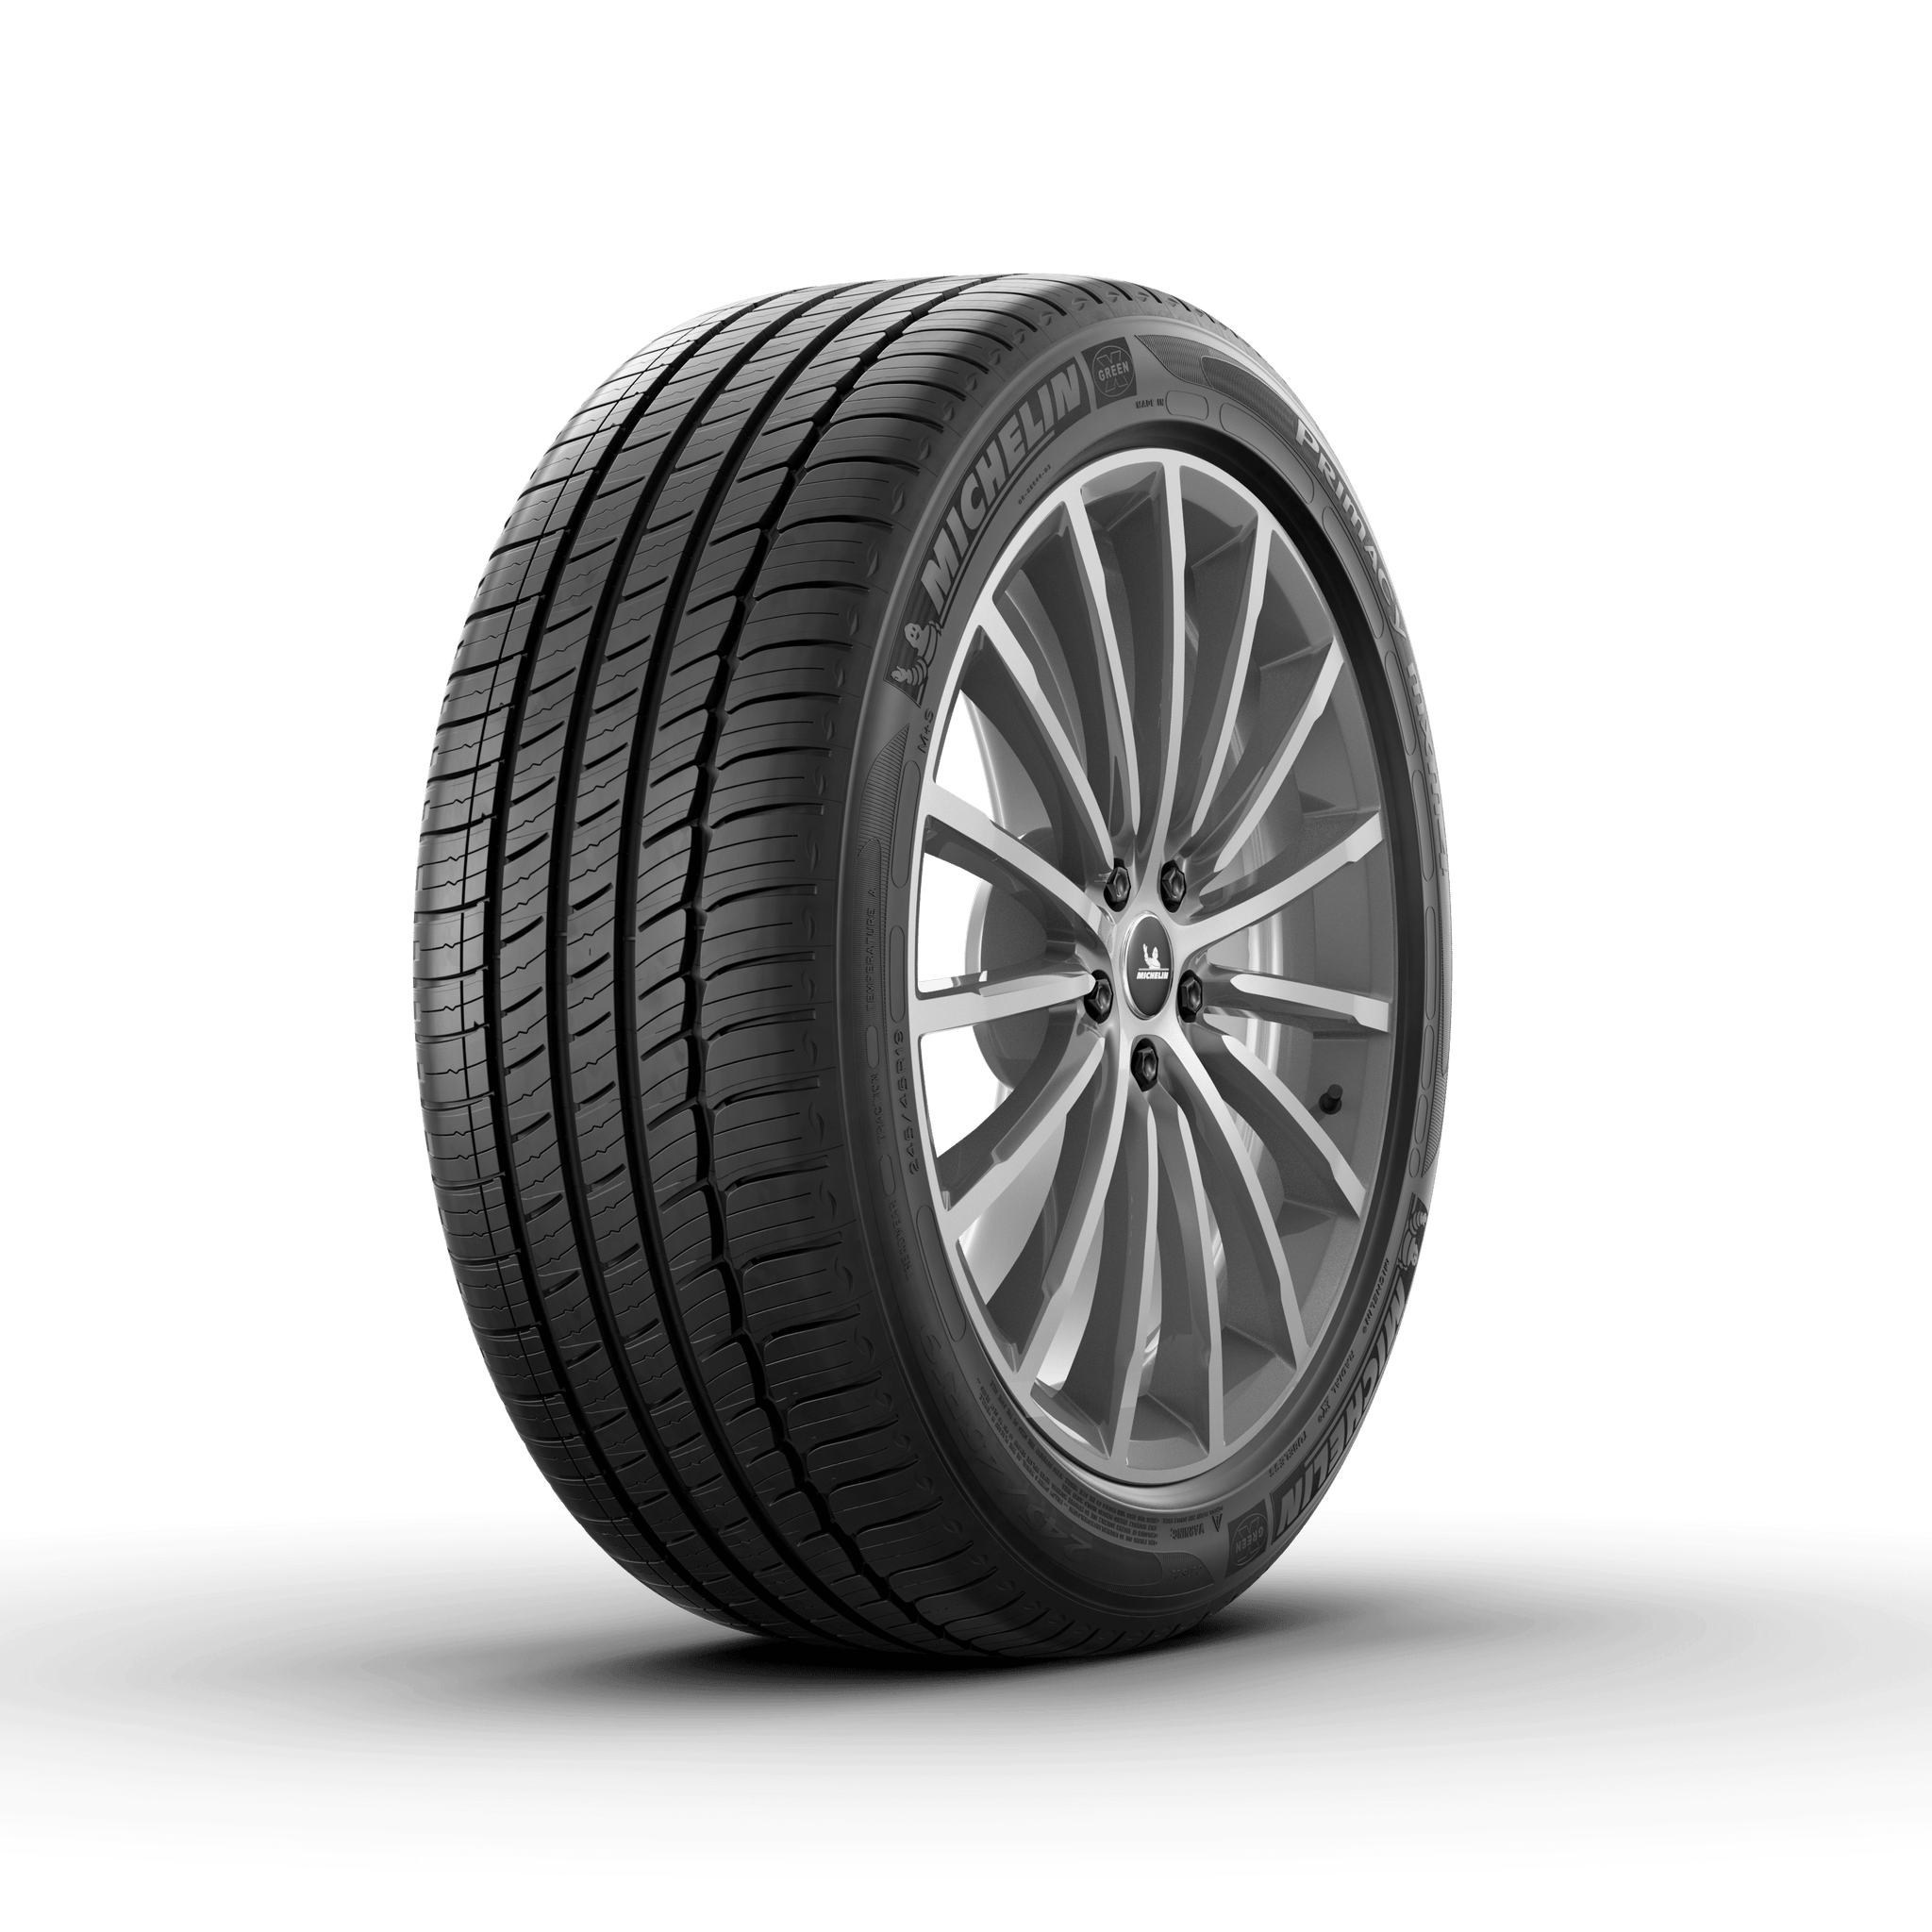 MICHELIN PRIMACY MXM4 245/45R19 (27.7X9.7R 19) Tires